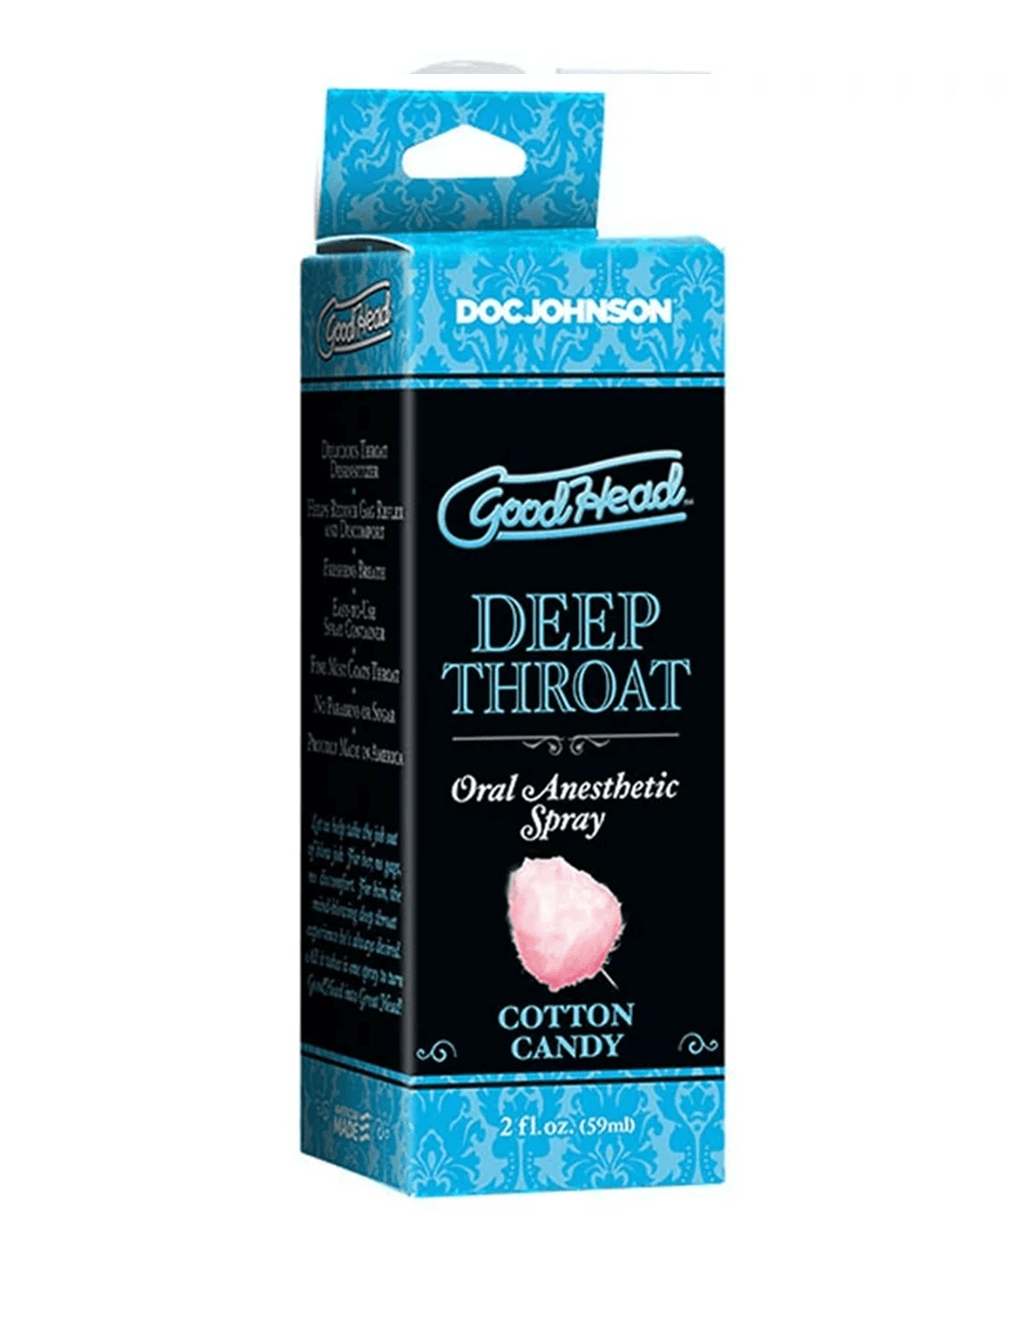 Goodhead Deep Throat Desensitizing Spray 2 oz Cotton Candy Package